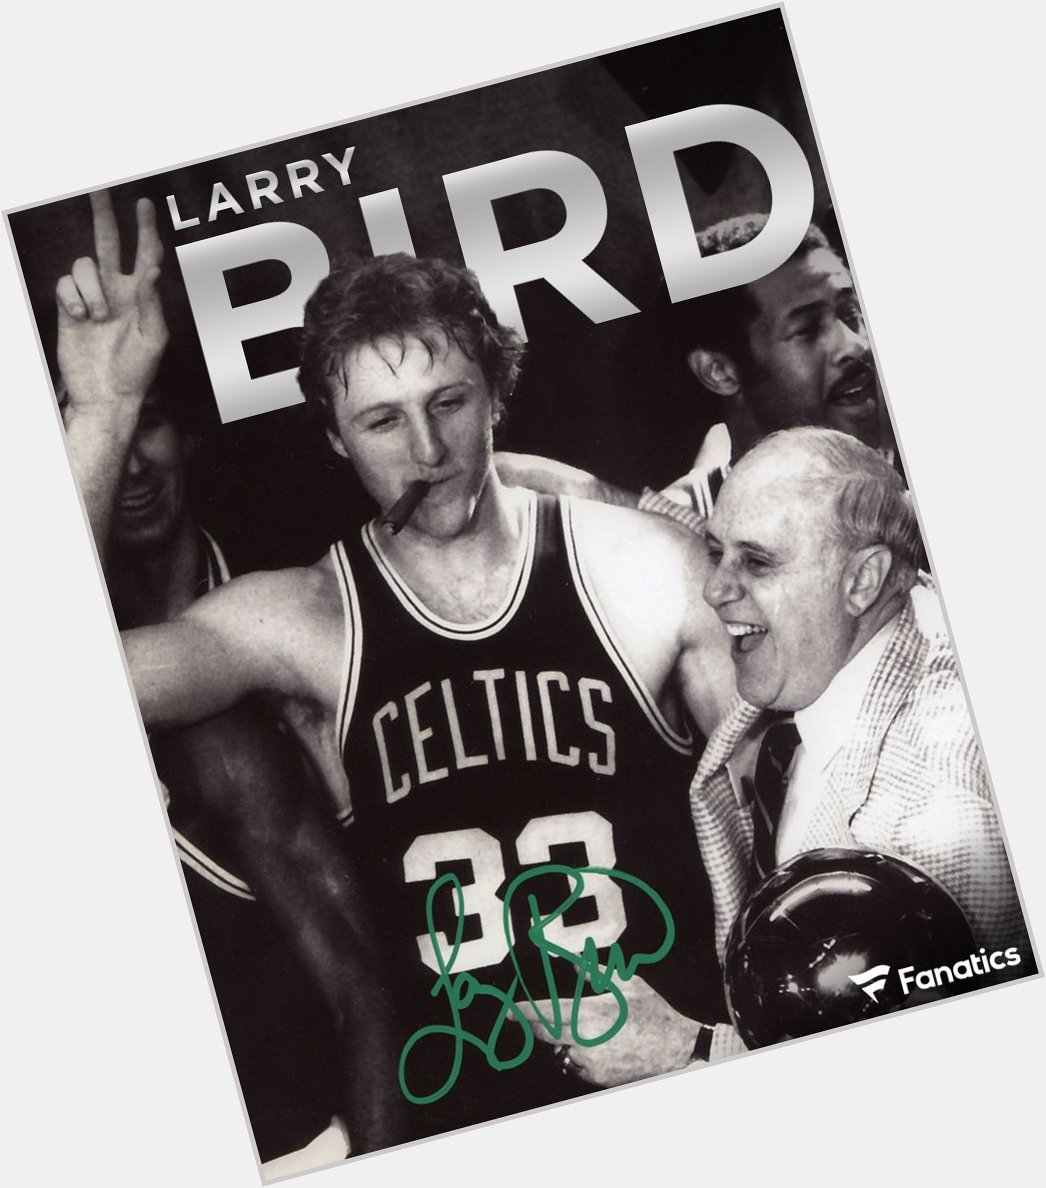 To wish a very happy birthday to Larry Bird!!      